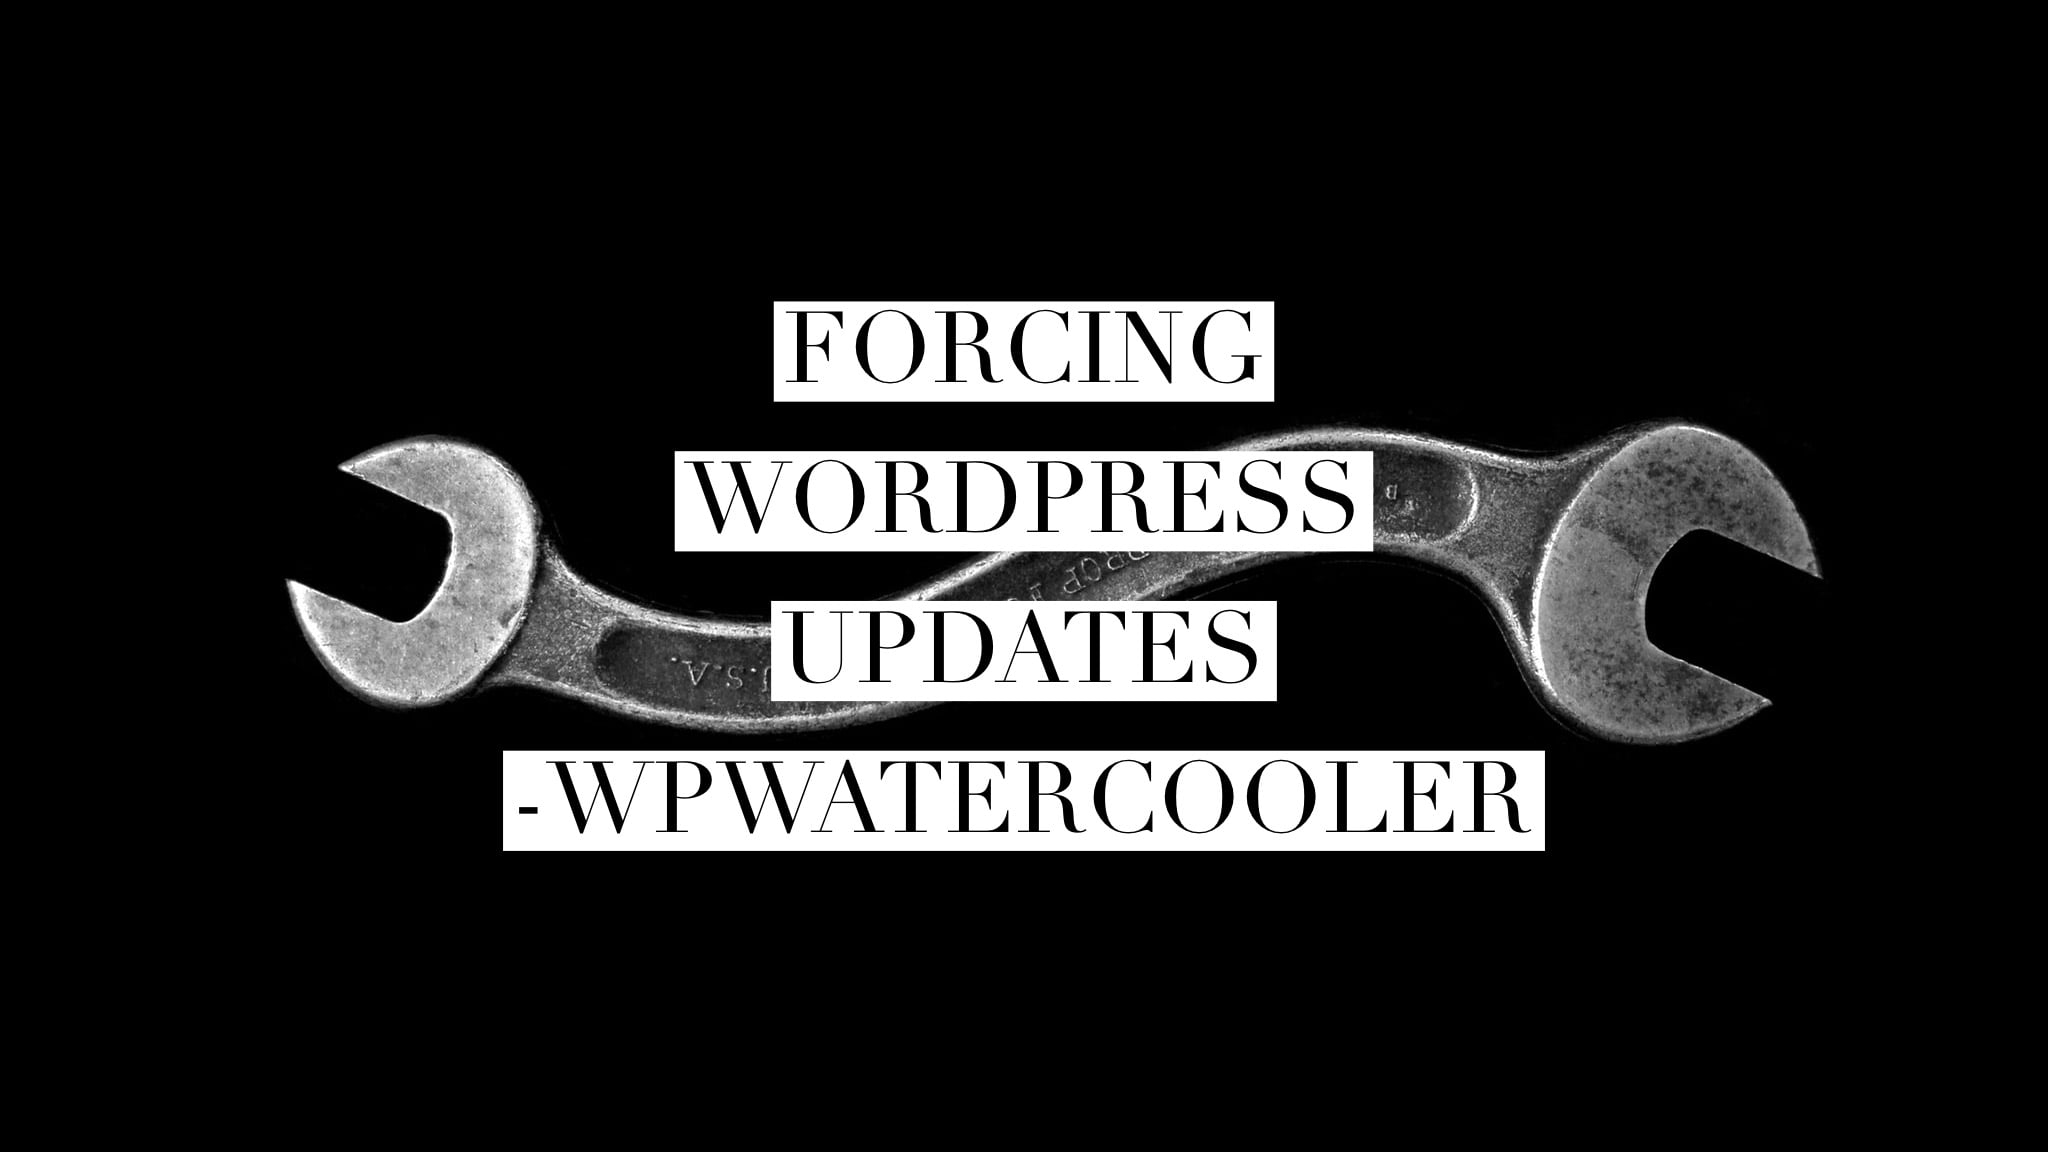 EP334 – Forcing WordPress Updates